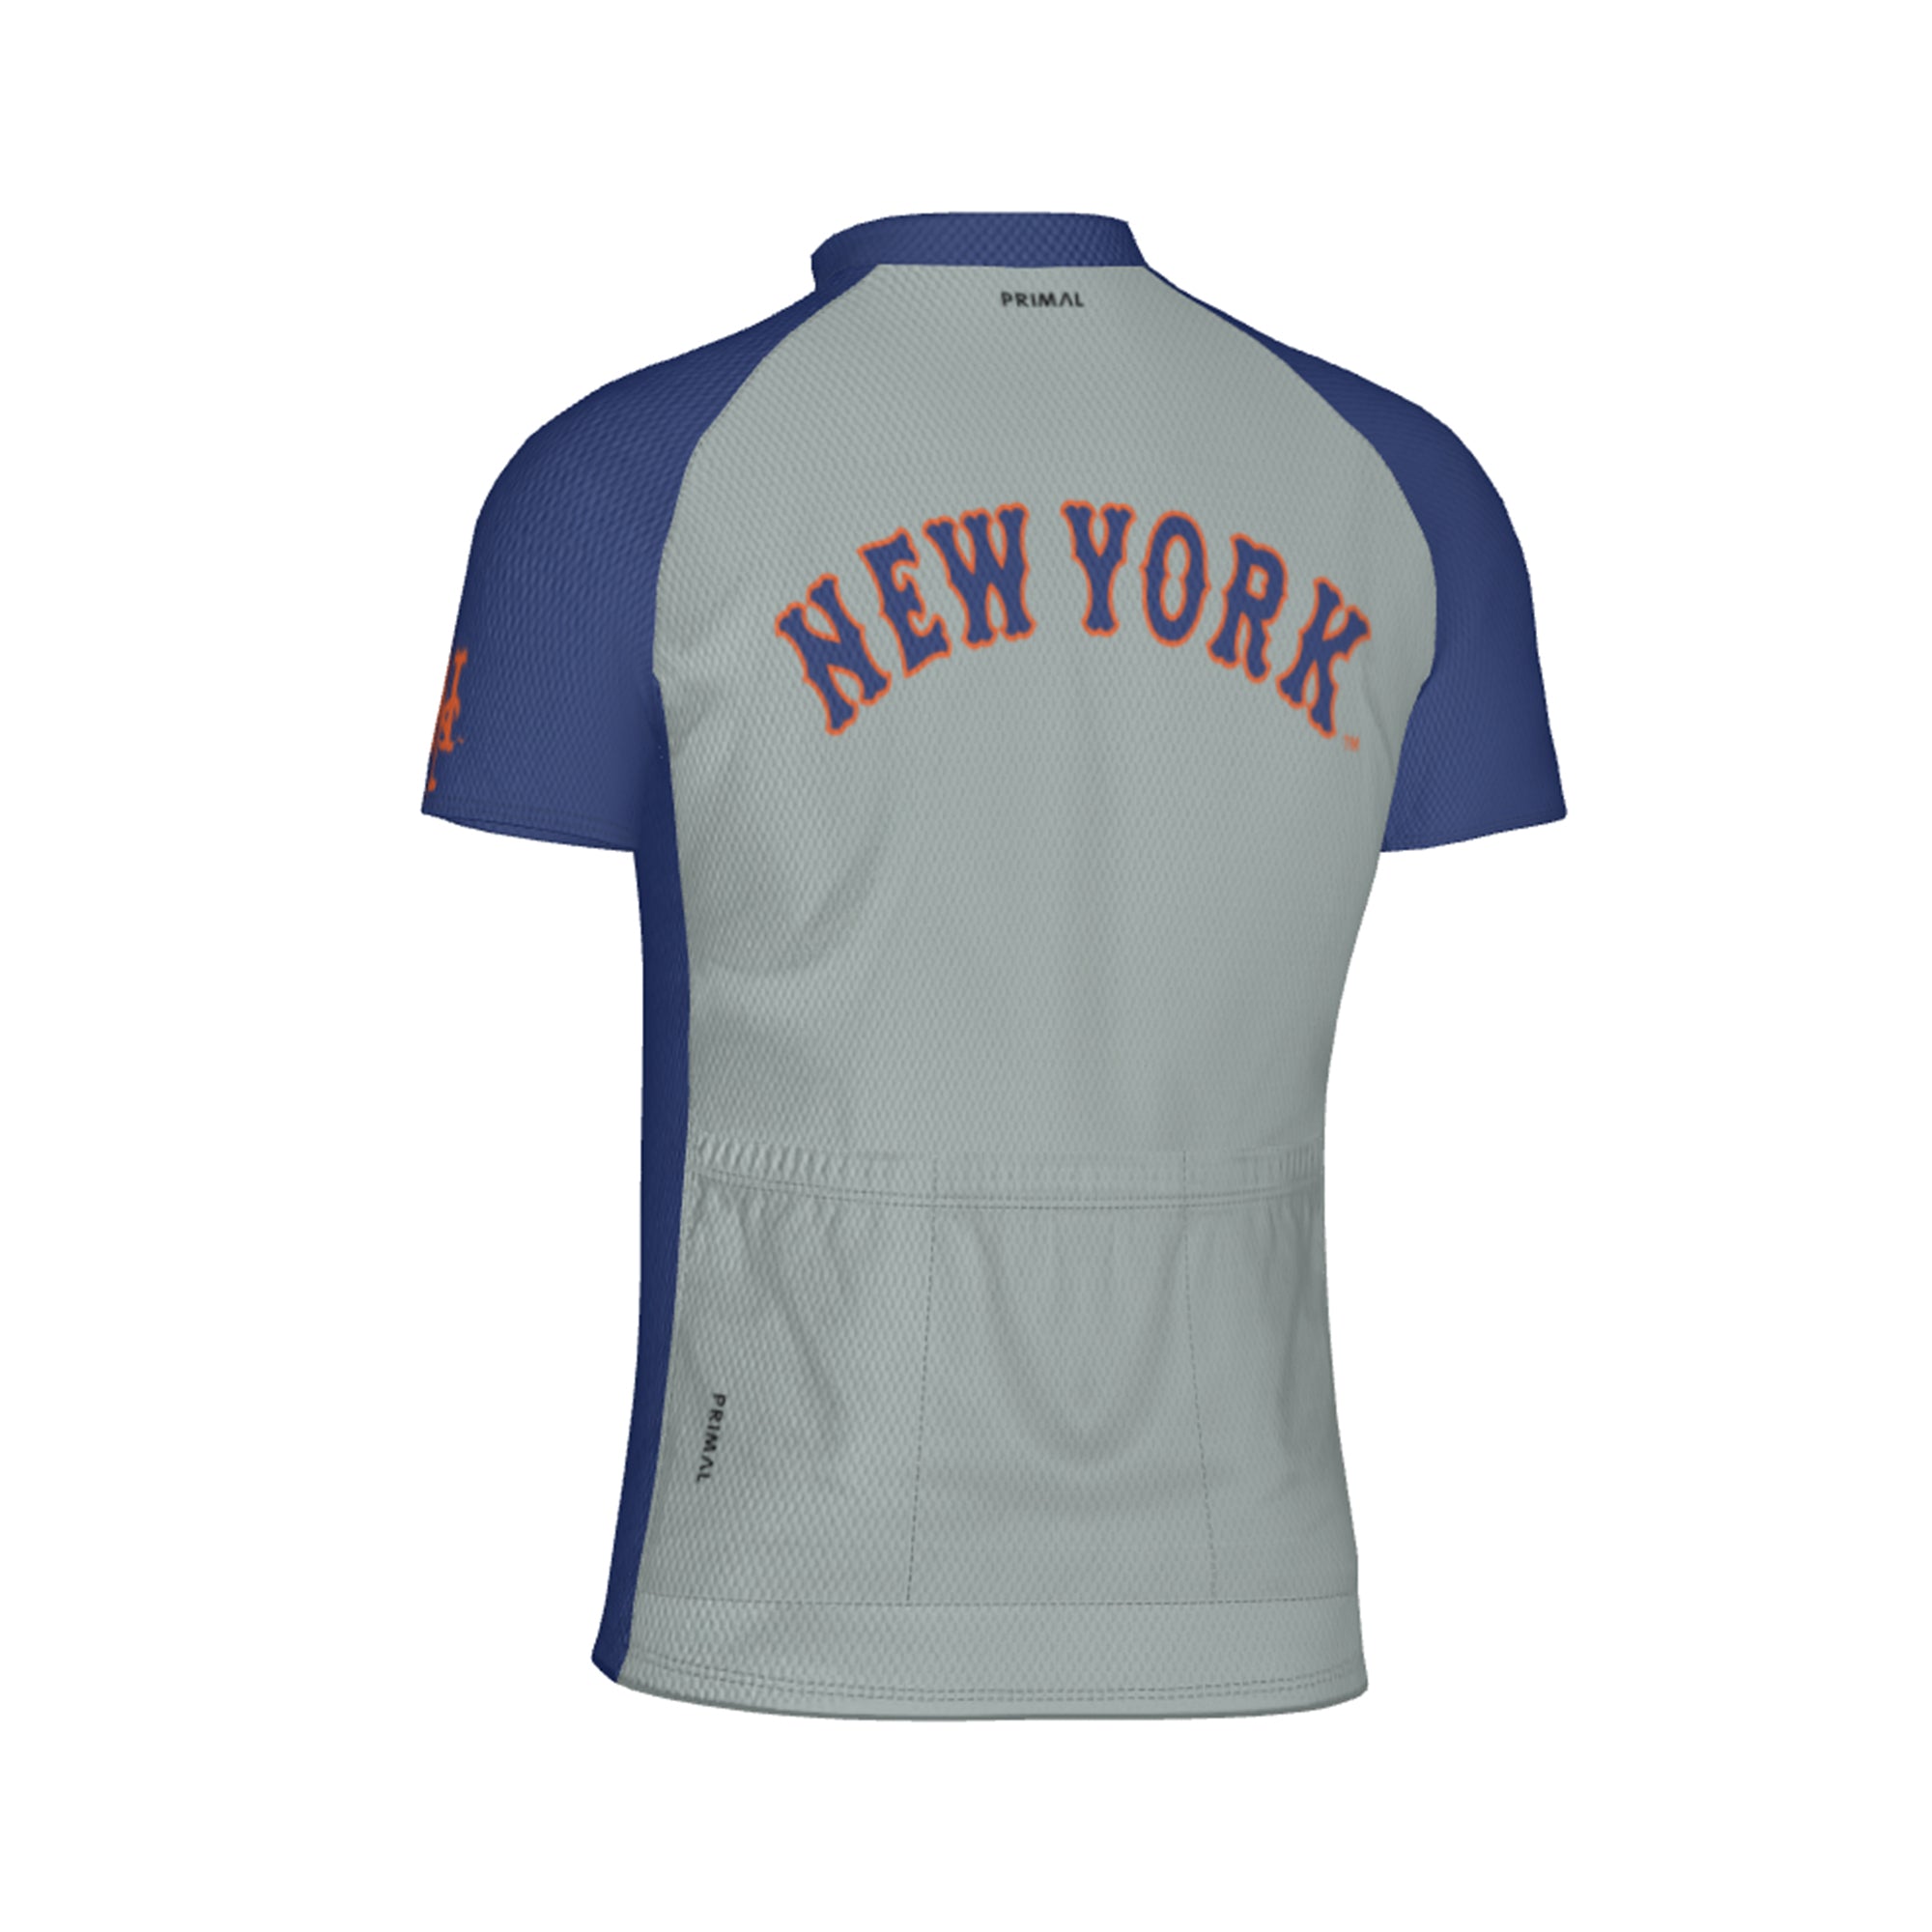 New York Mets Hawaiian Shirtnew Fabric for 2017 